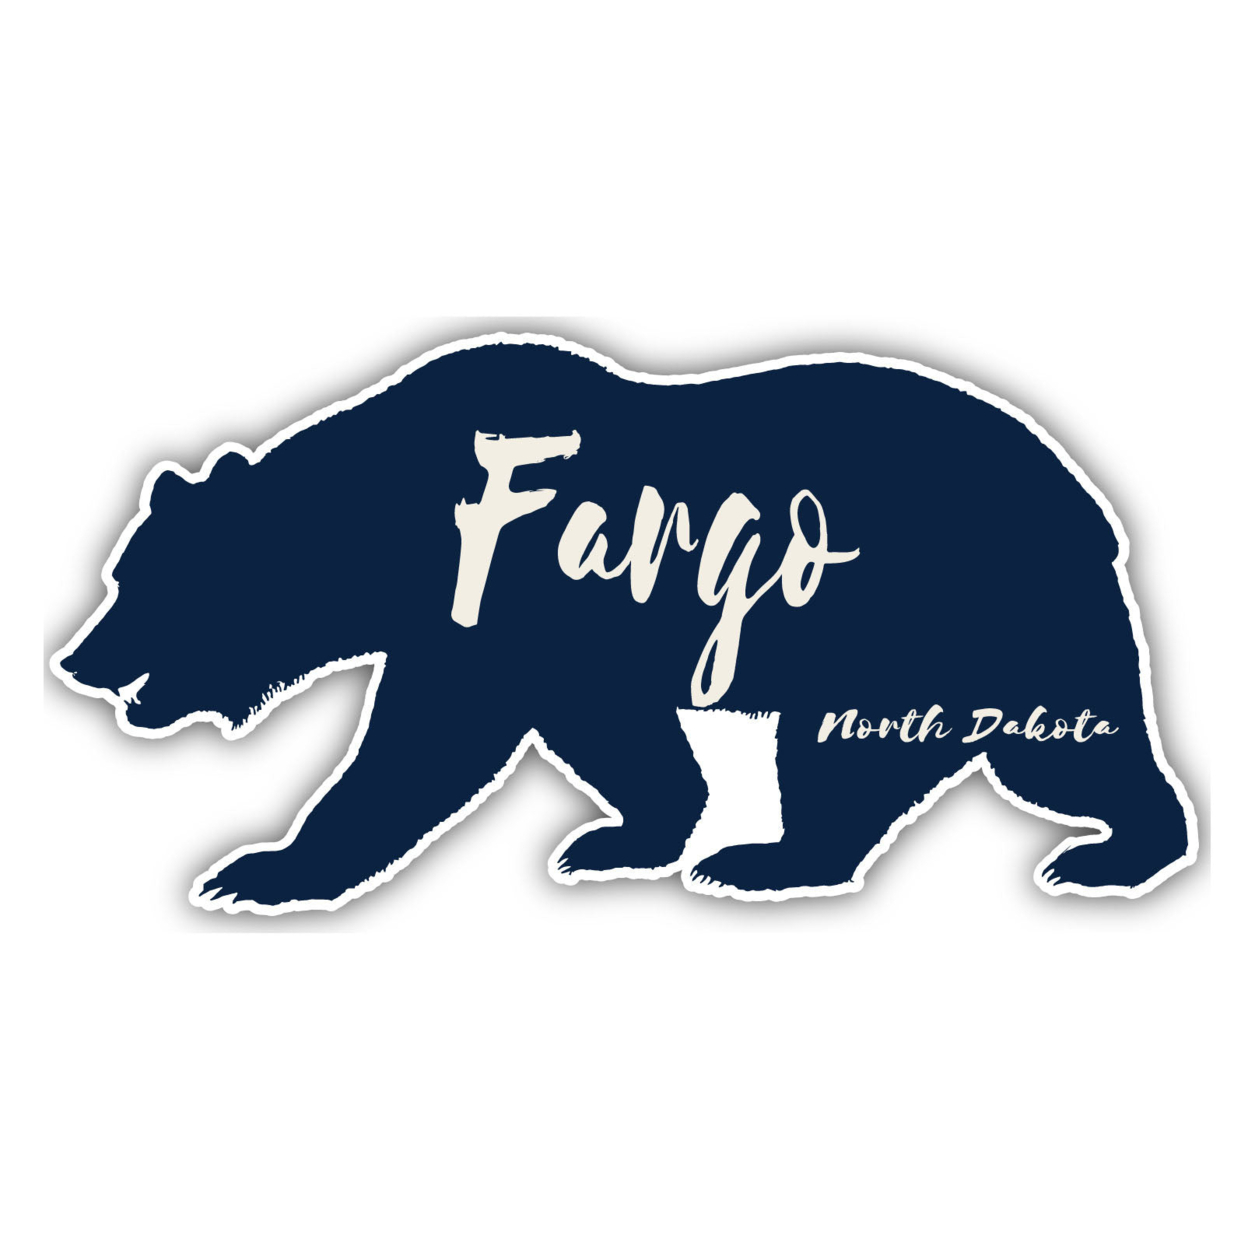 Fargo North Dakota Souvenir Decorative Stickers (Choose Theme And Size) - 4-Pack, 10-Inch, Tent